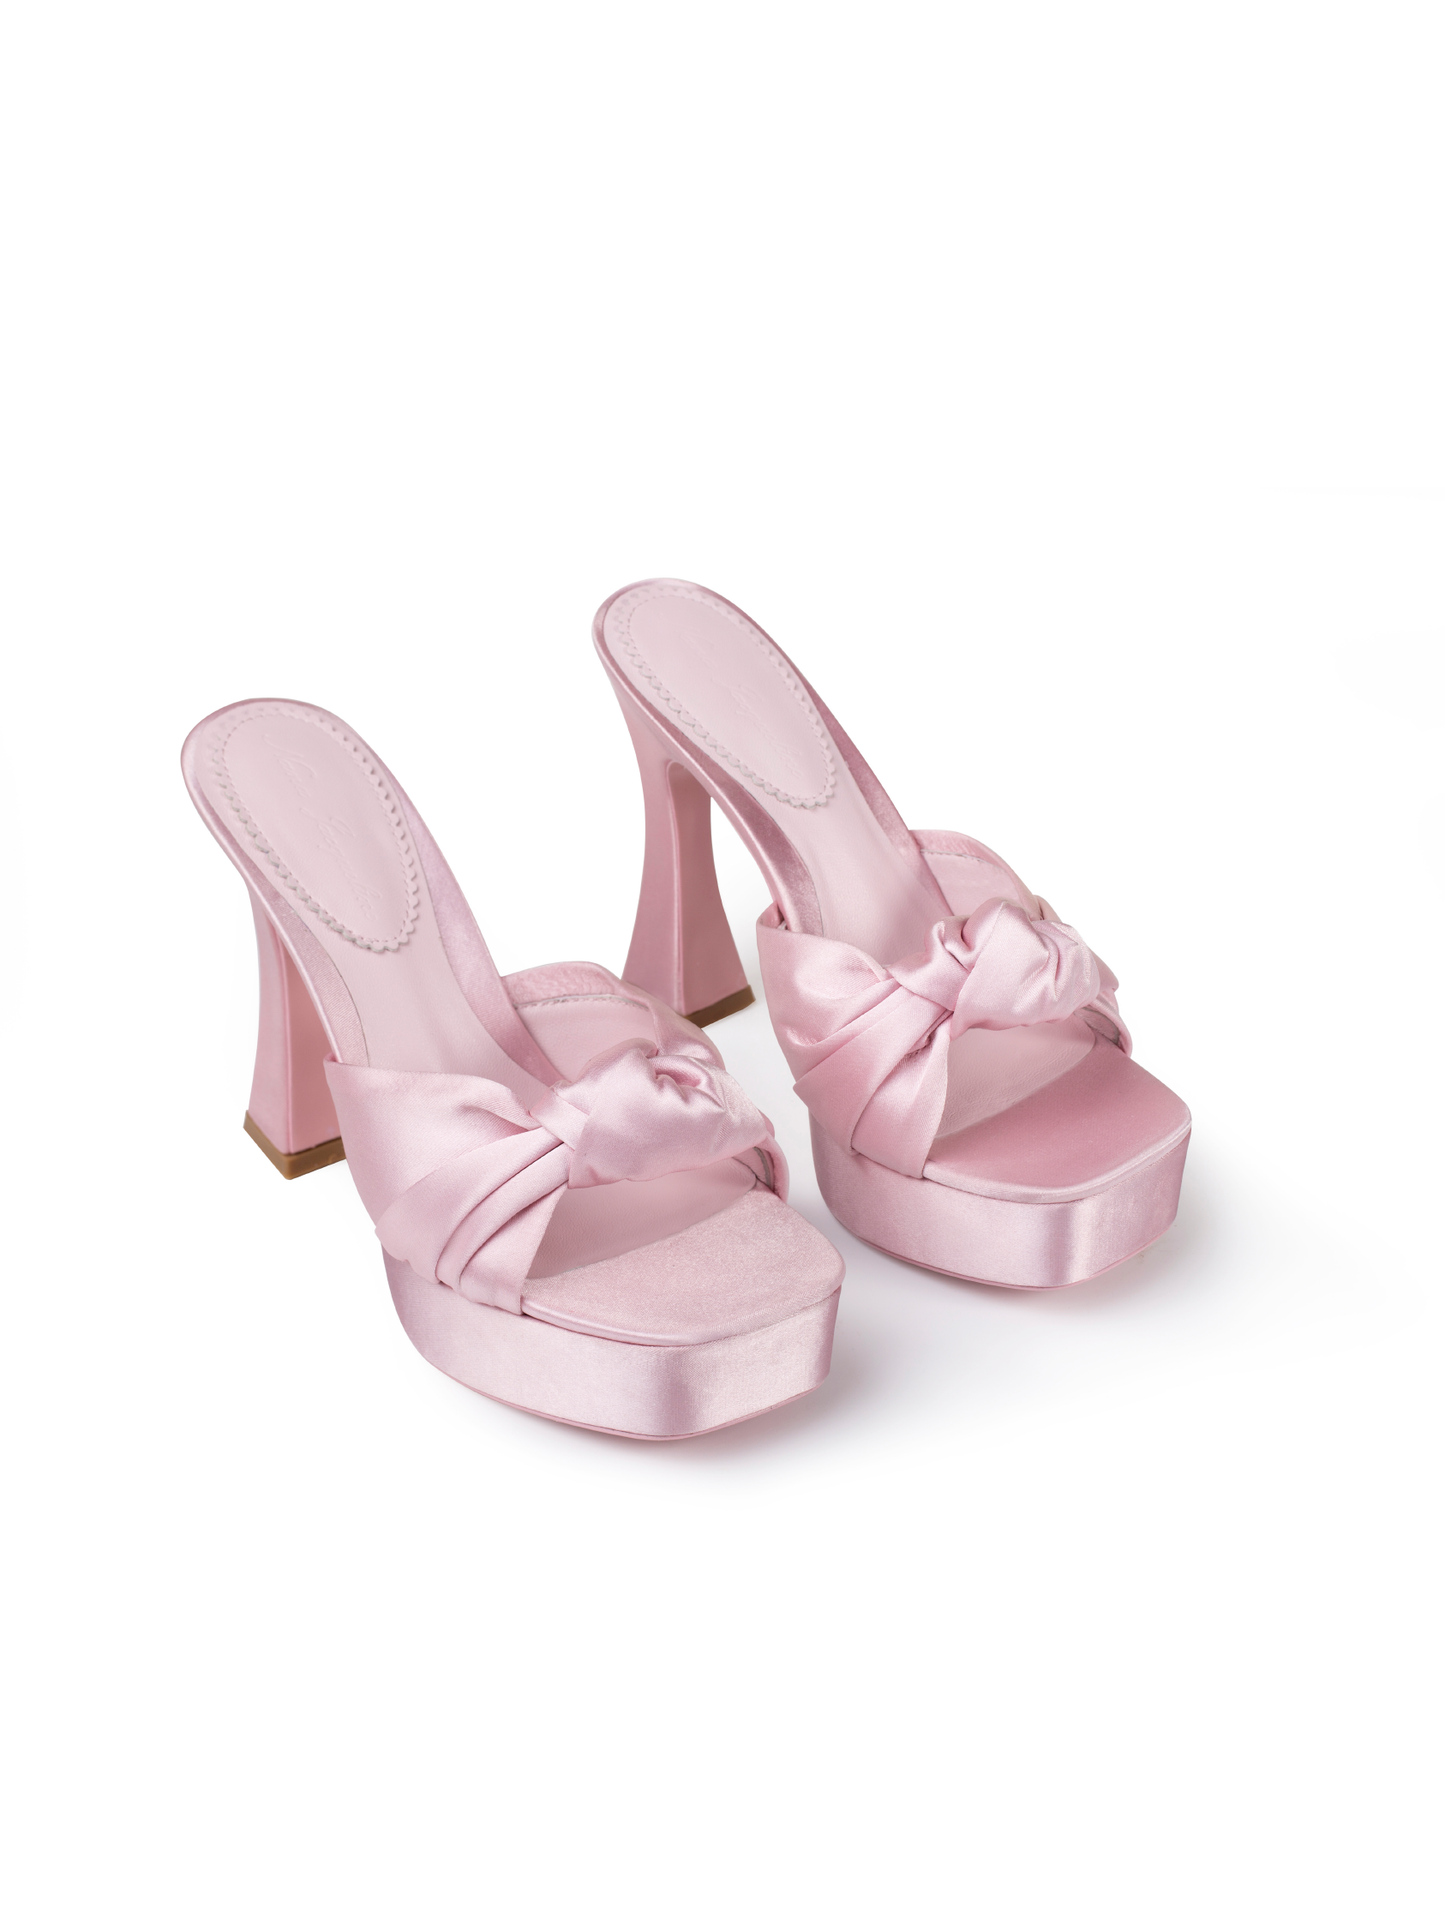 Mara Platform Sandals (Light Pink)